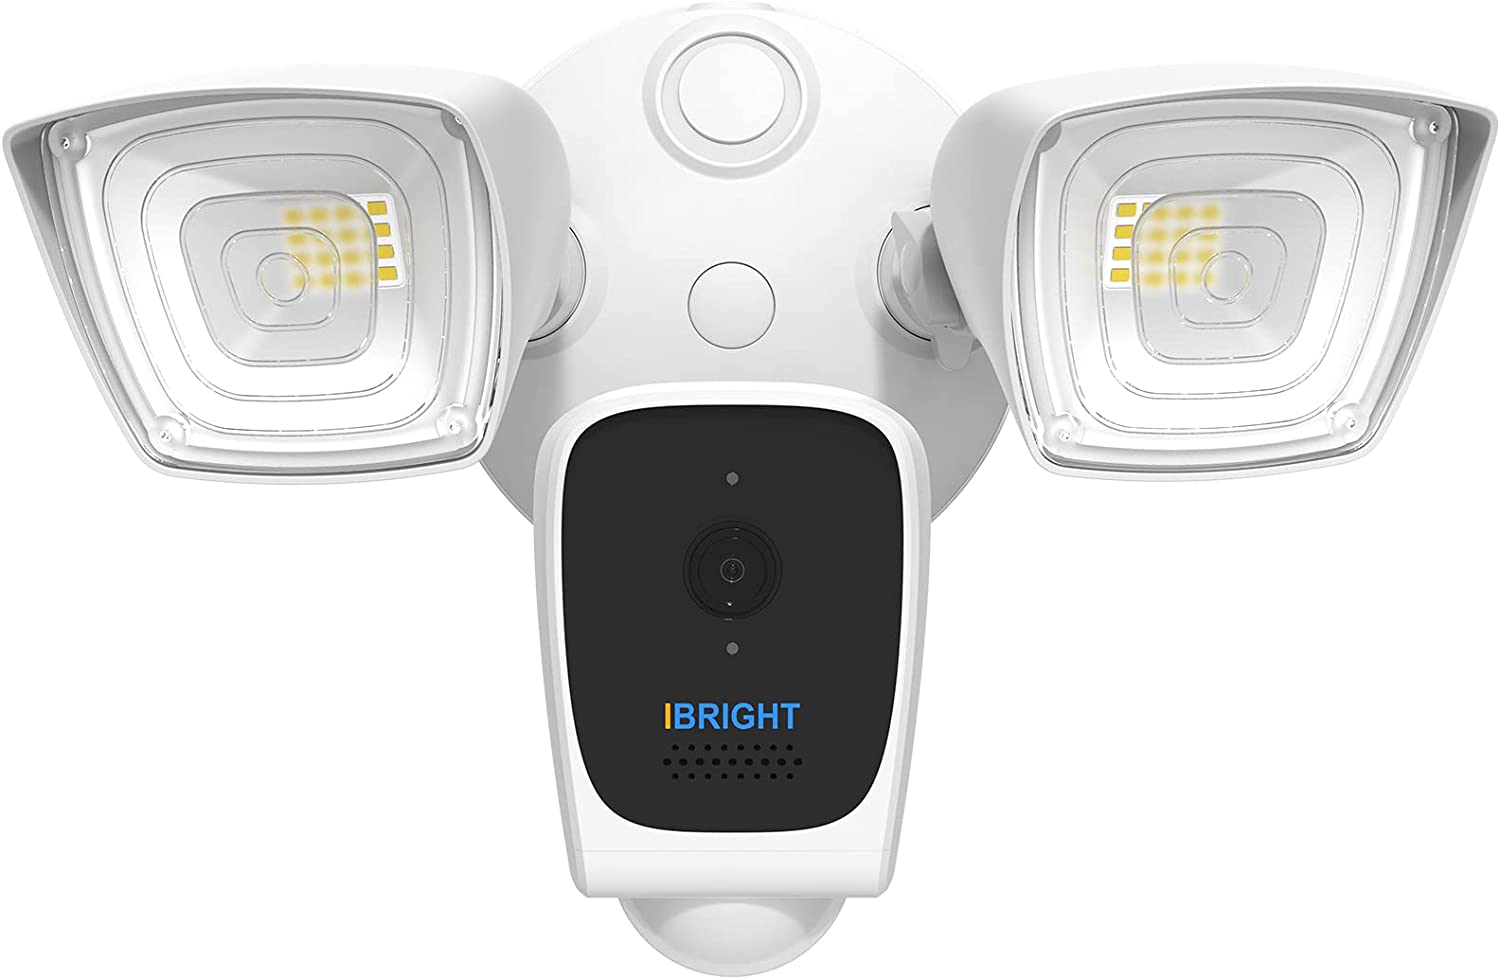 IBright Light bulb Camera